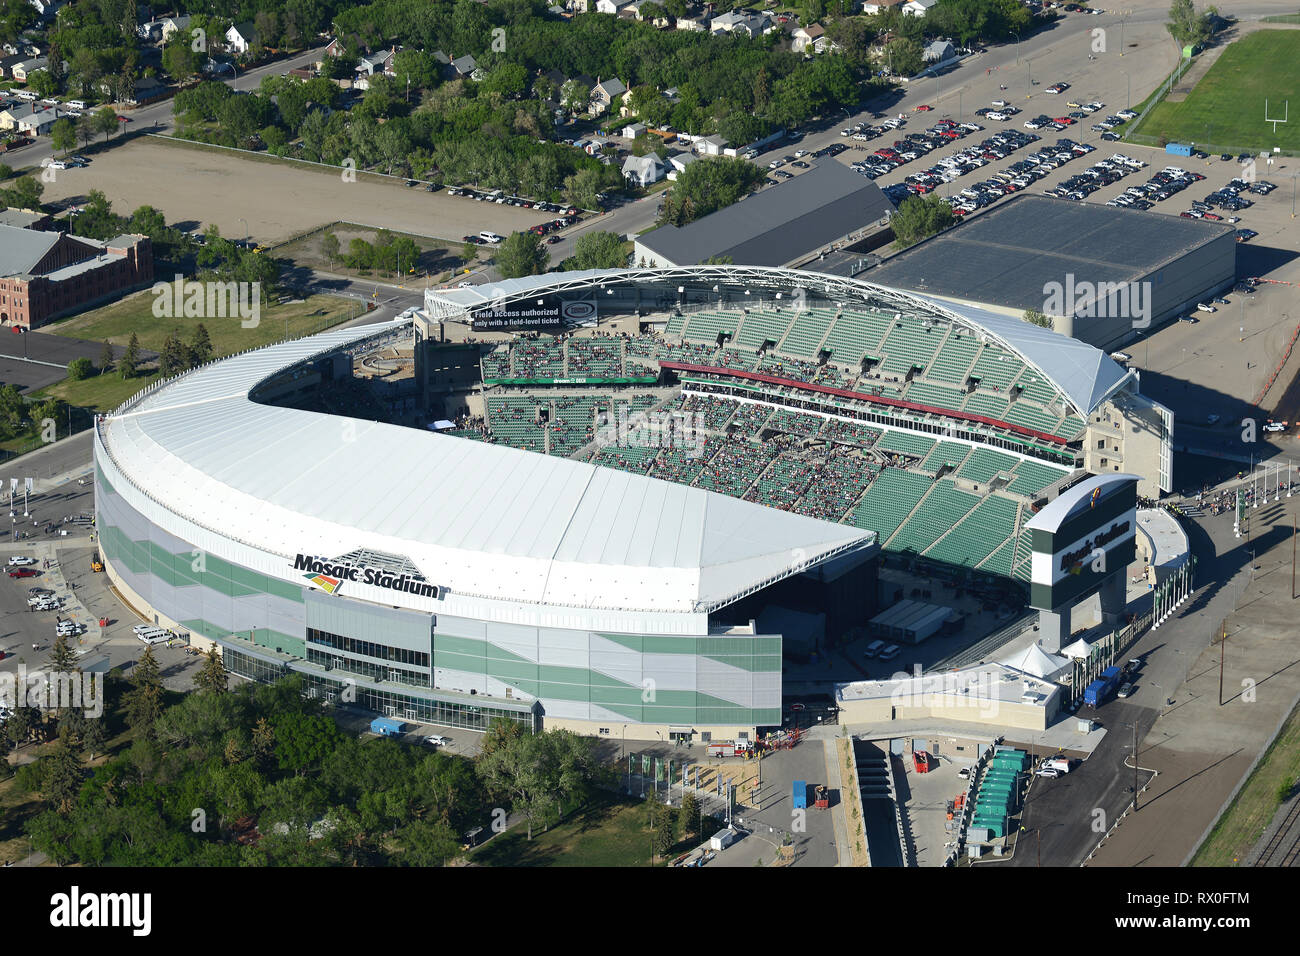 Antenna, Mosaic Stadium, Regina, Saskatchewan, Canada Foto stock - Alamy